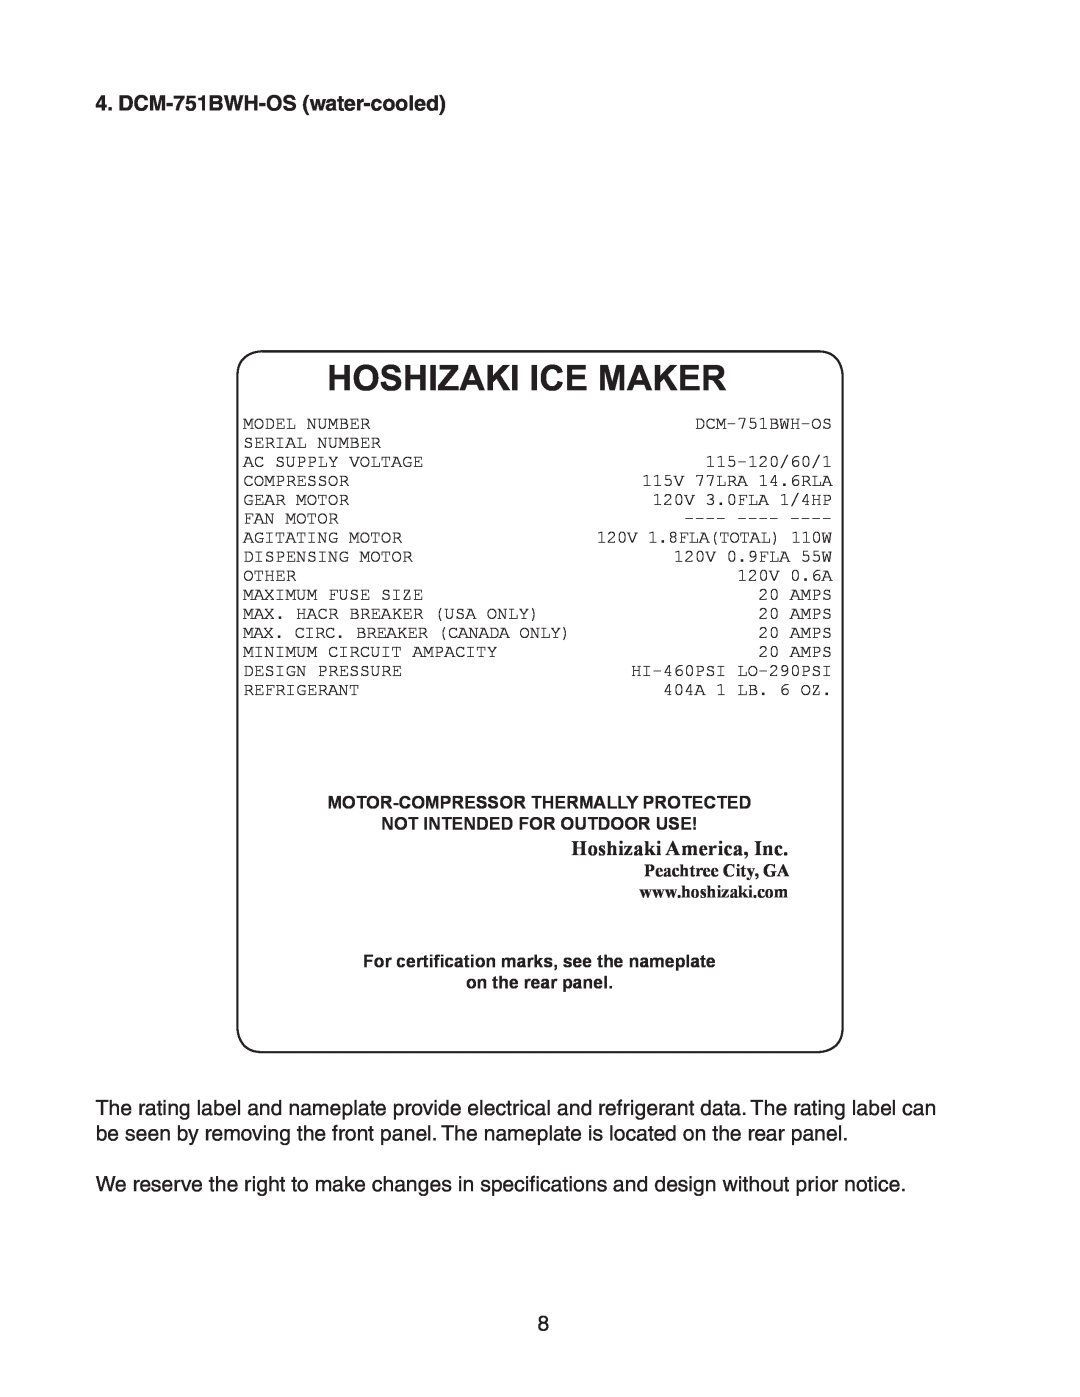 Hoshizaki DCM-751BAH(-OS), DCM-751BWH(-OS) DCM-751BWH-OS water-cooled, Hoshizaki Ice Maker, Hoshizaki America, Inc 